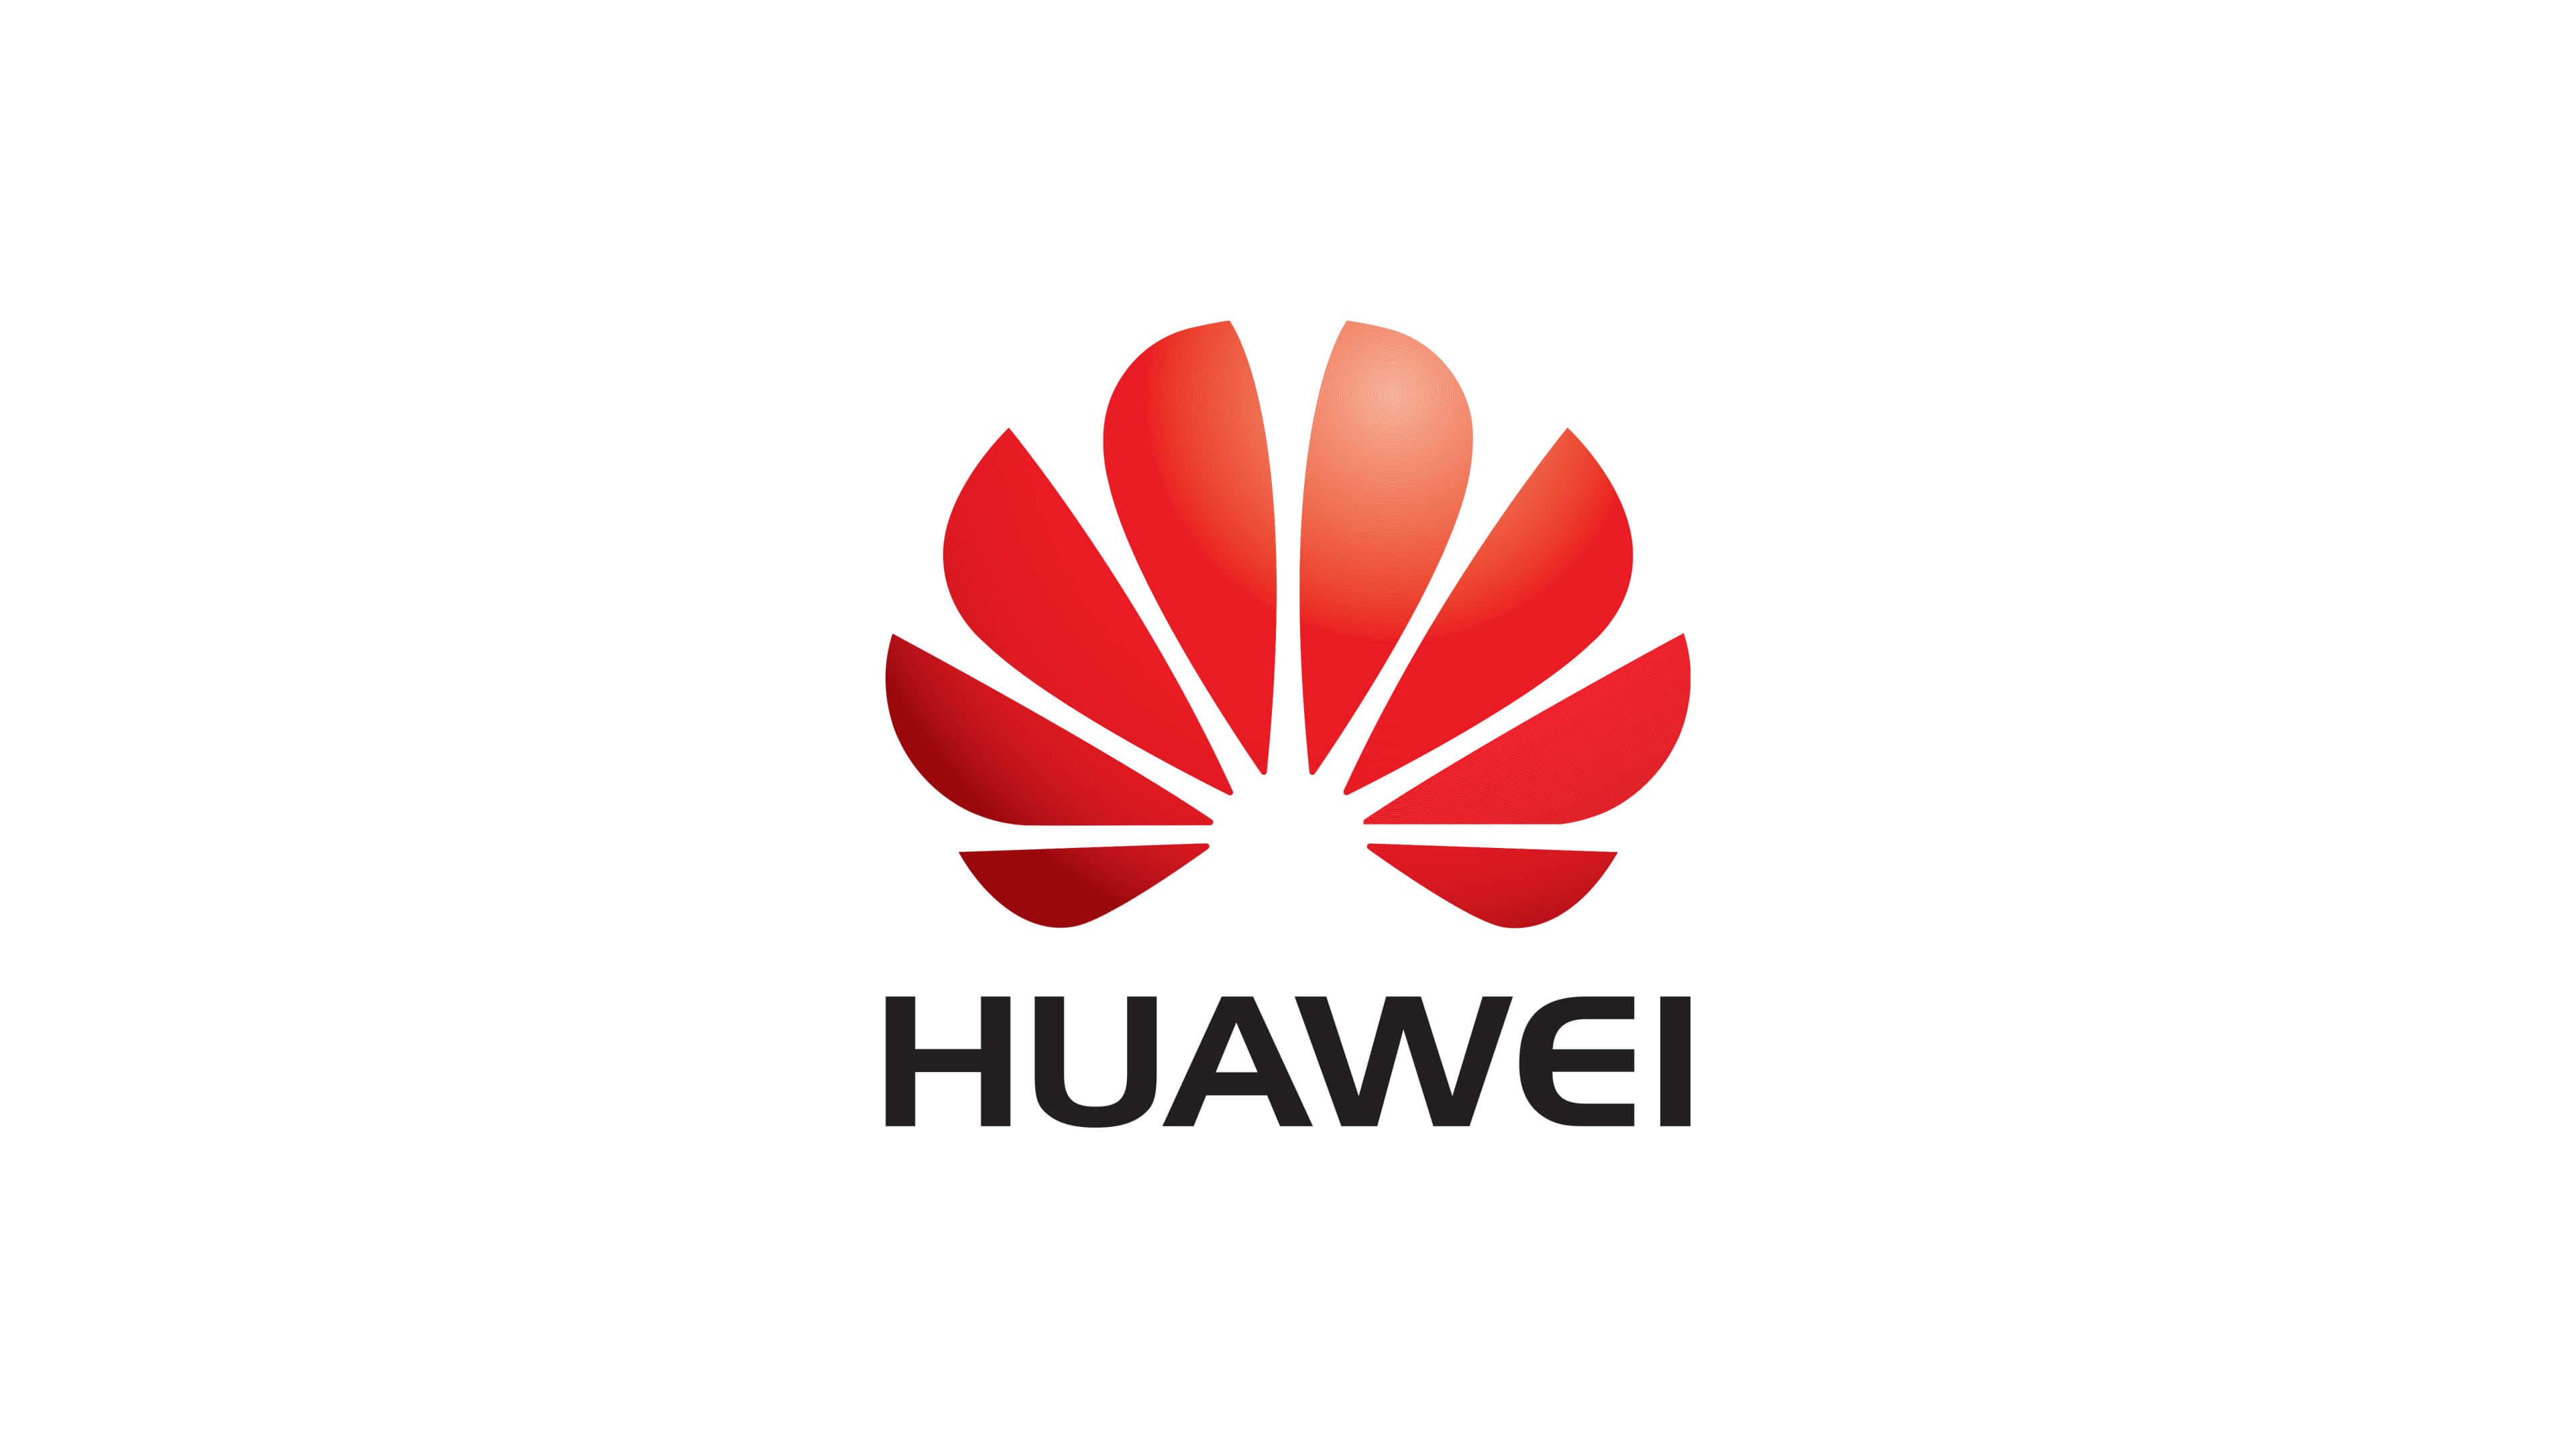 Huawei 4K wallpapers, Michelle Sellers post, 3840x2160 4K Desktop